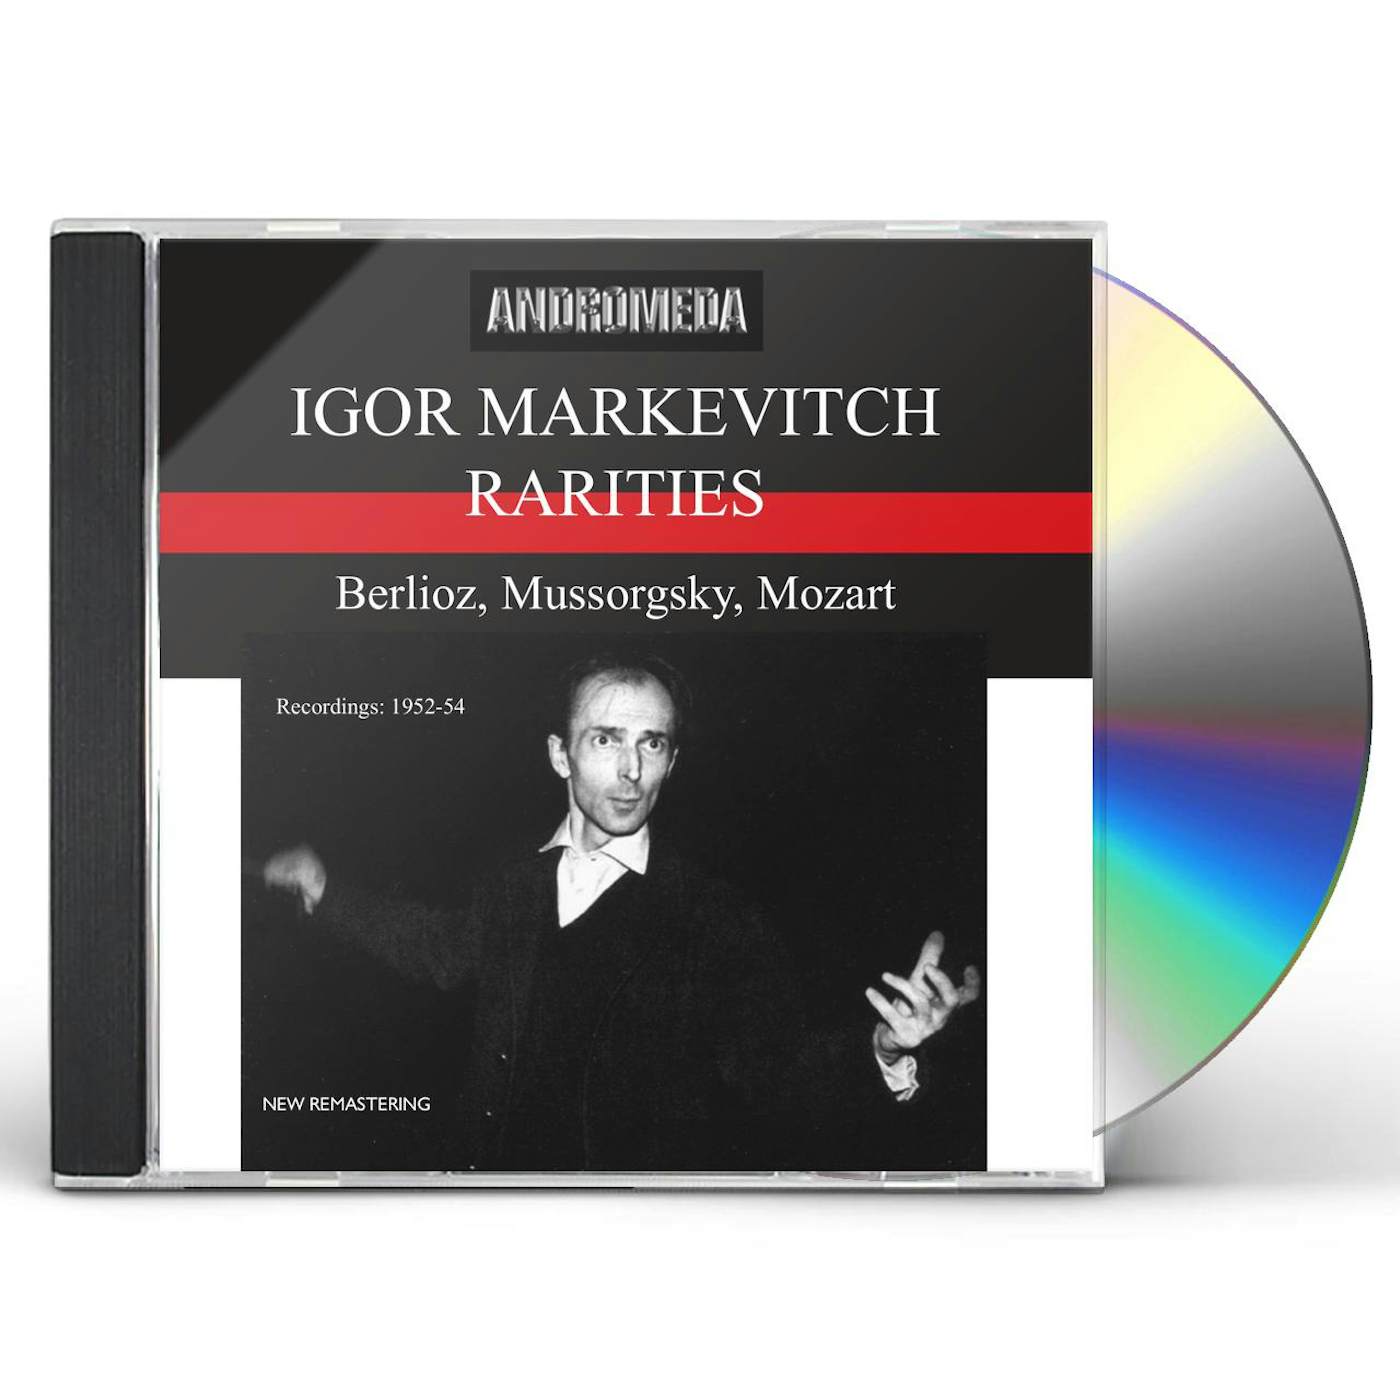 Berlioz MARKEVITCH RARITIES: RIAS CD